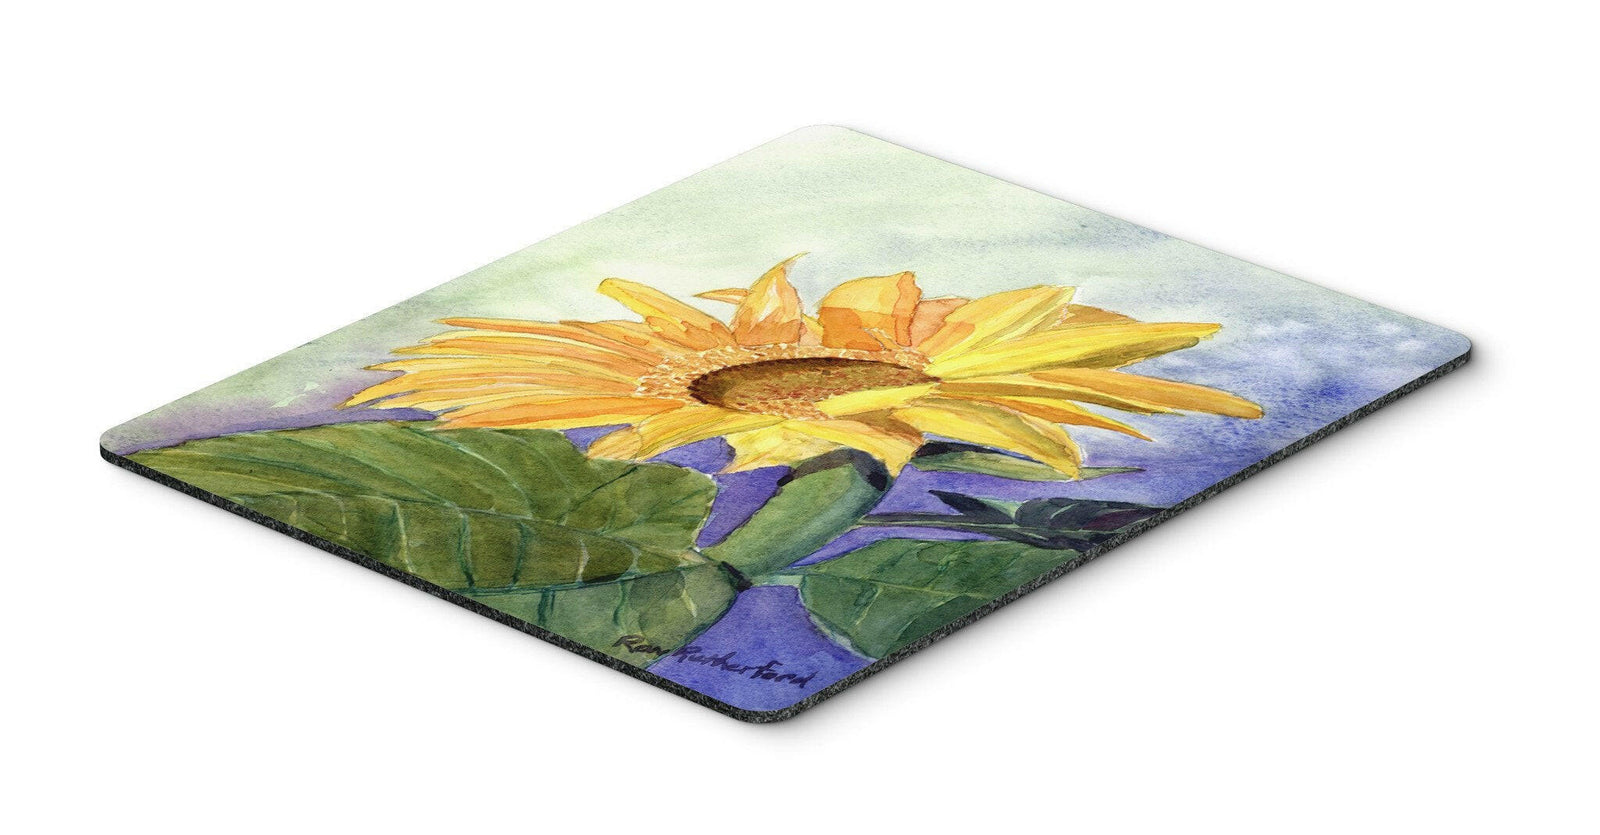 Flower - Sunflower Mouse Pad, Hot Pad or Trivet by Caroline's Treasures